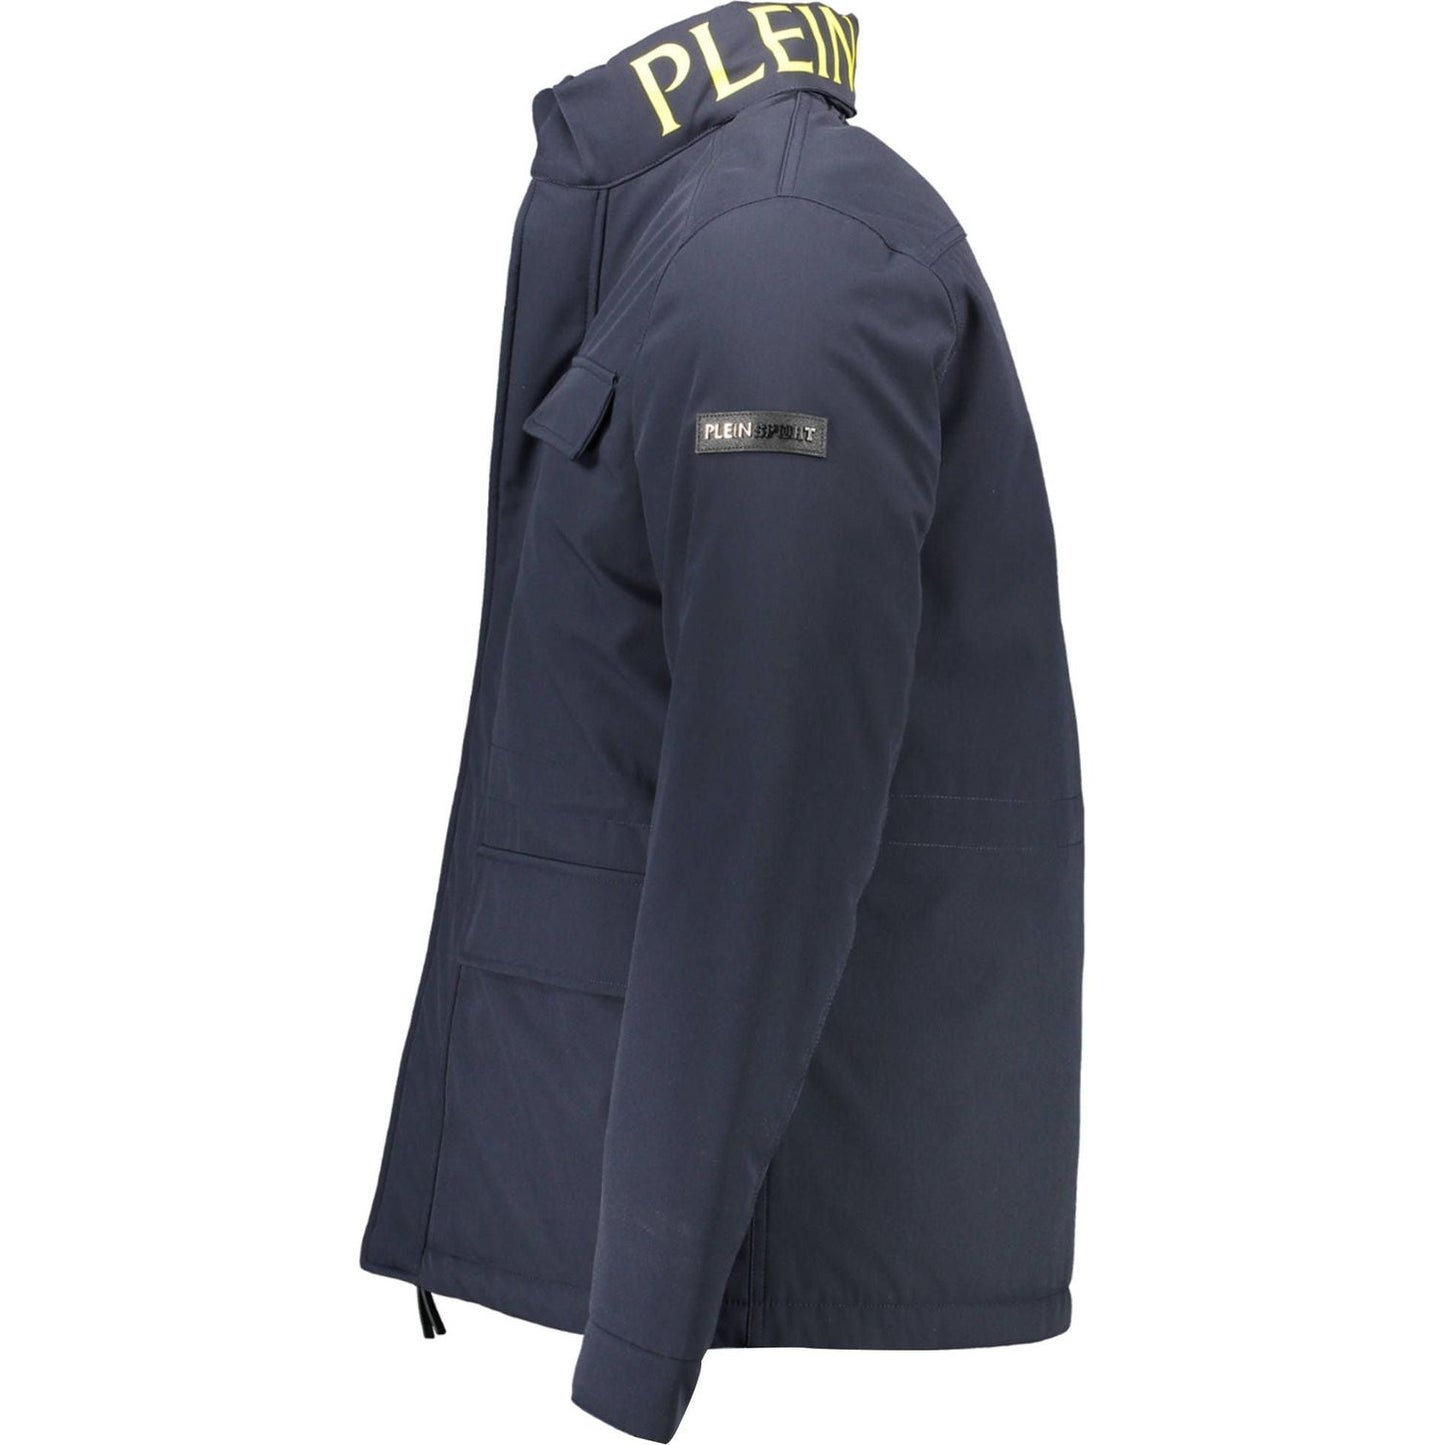 Plein Sport Sleek Long-Sleeved Designer Jacket sleek-long-sleeved-designer-jacket